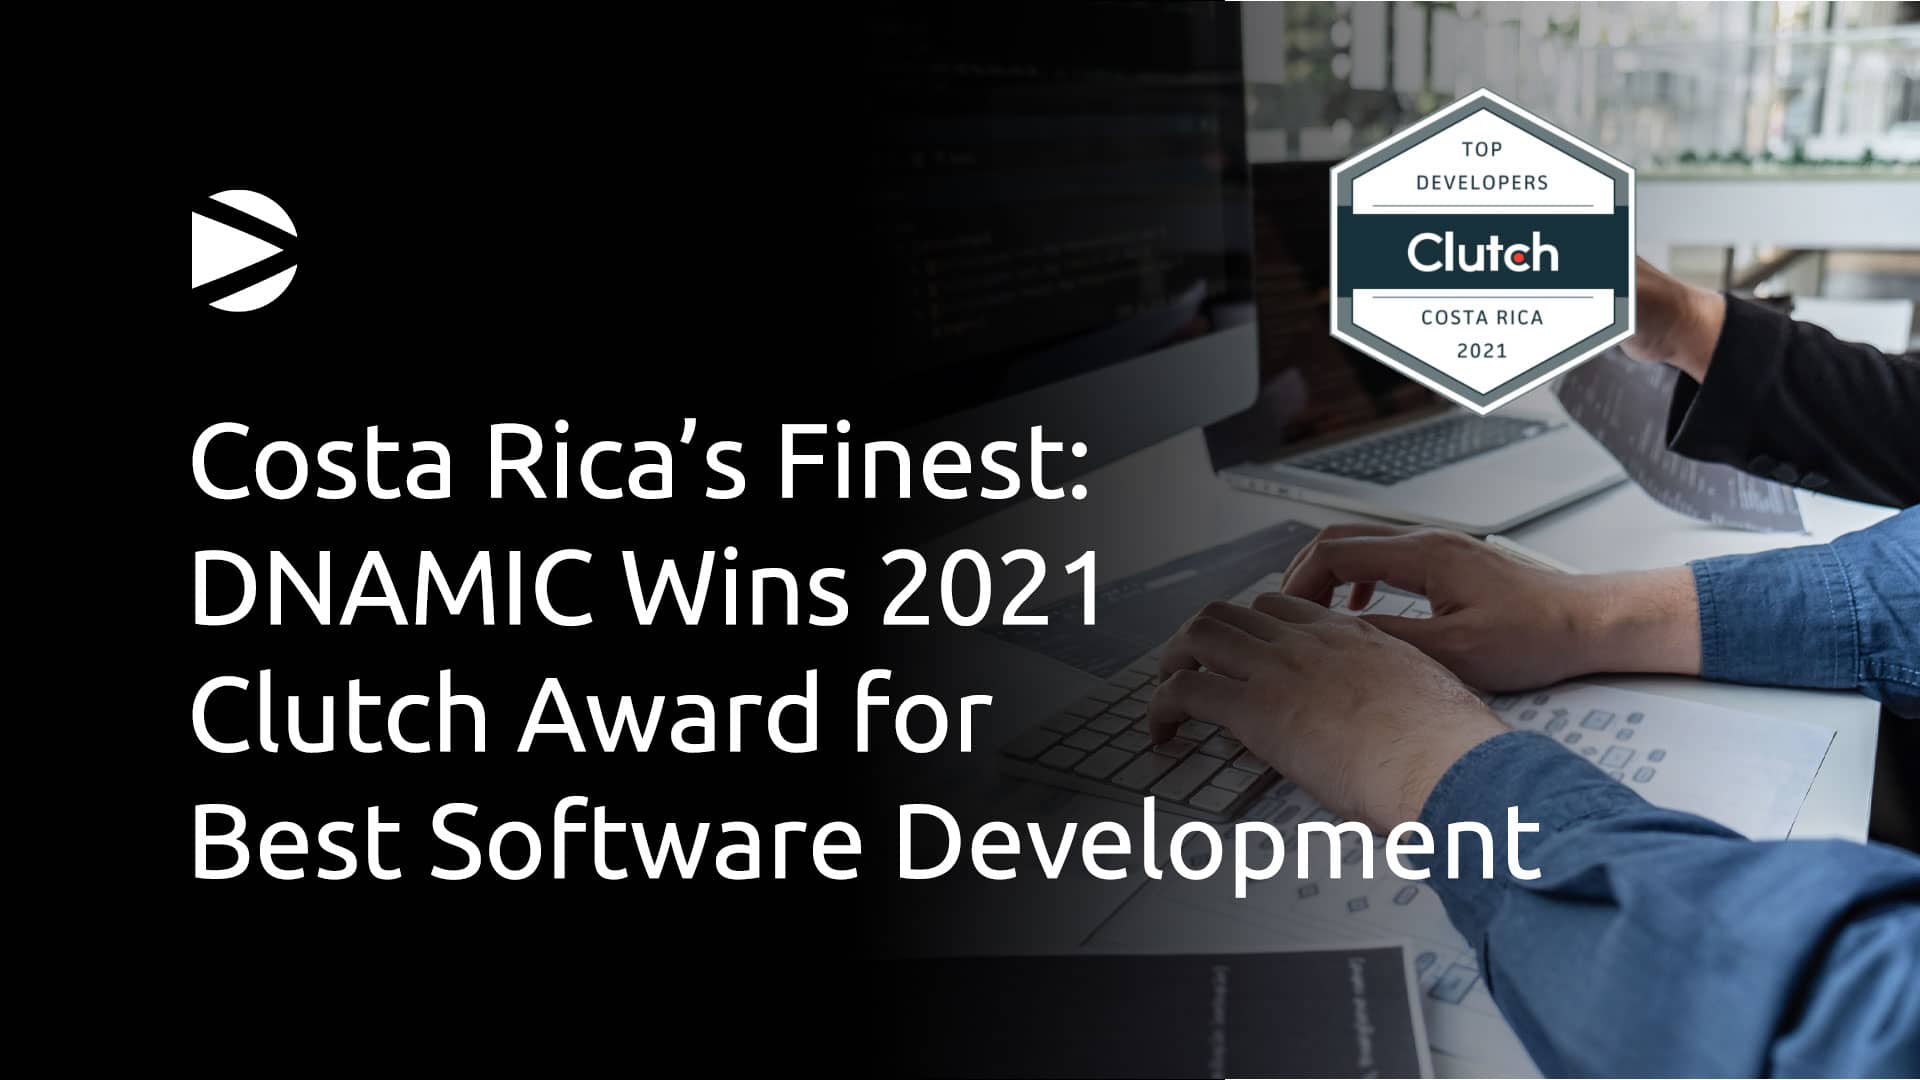 DNAMIC - Clutch Award for Best Software Development